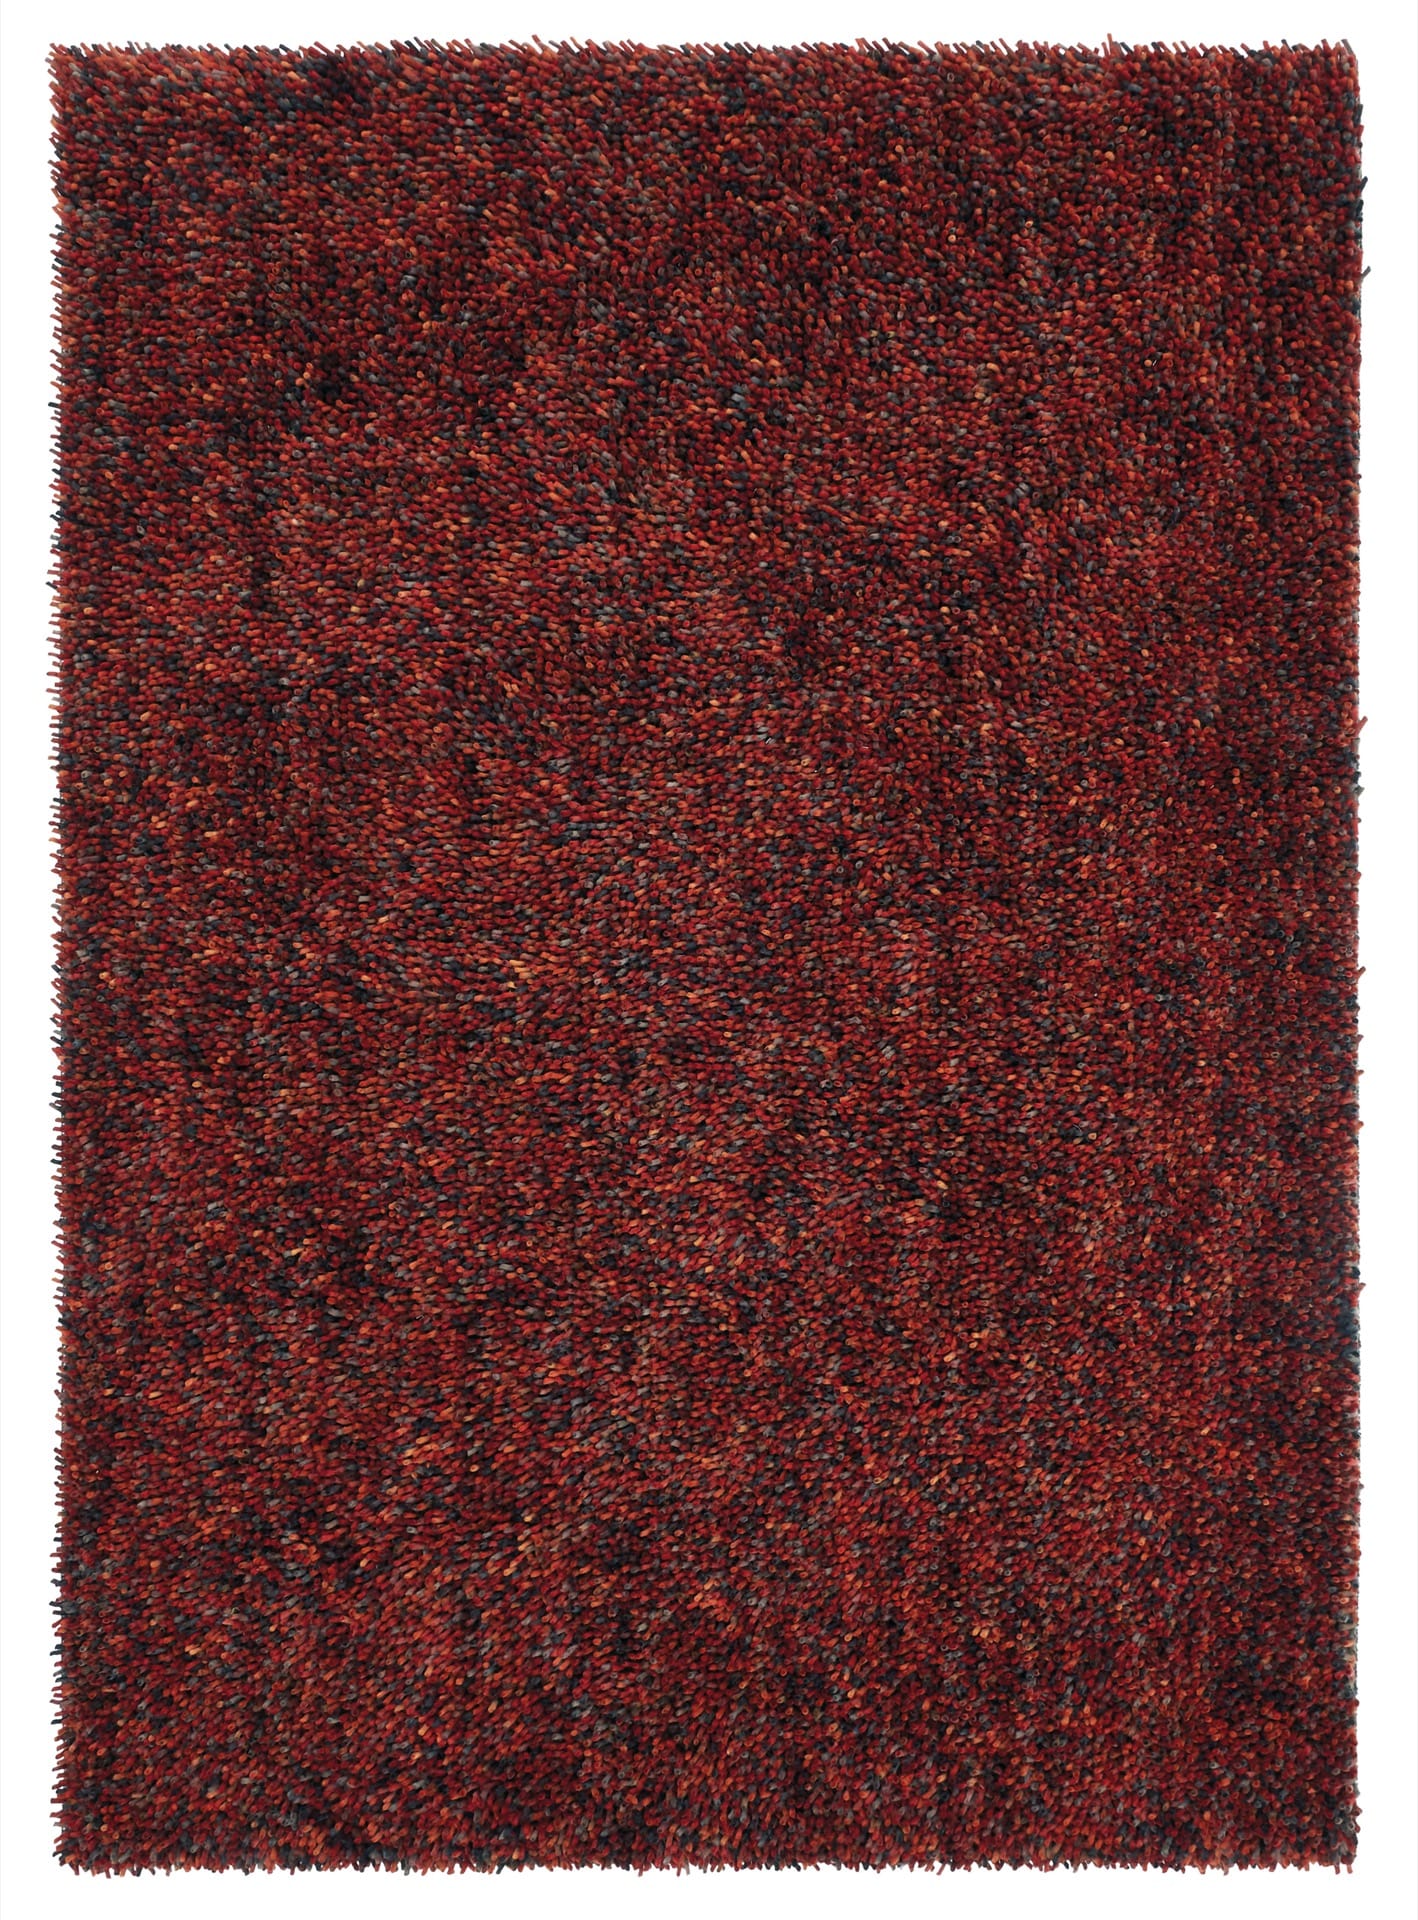 Dots 170503 rug by Brink